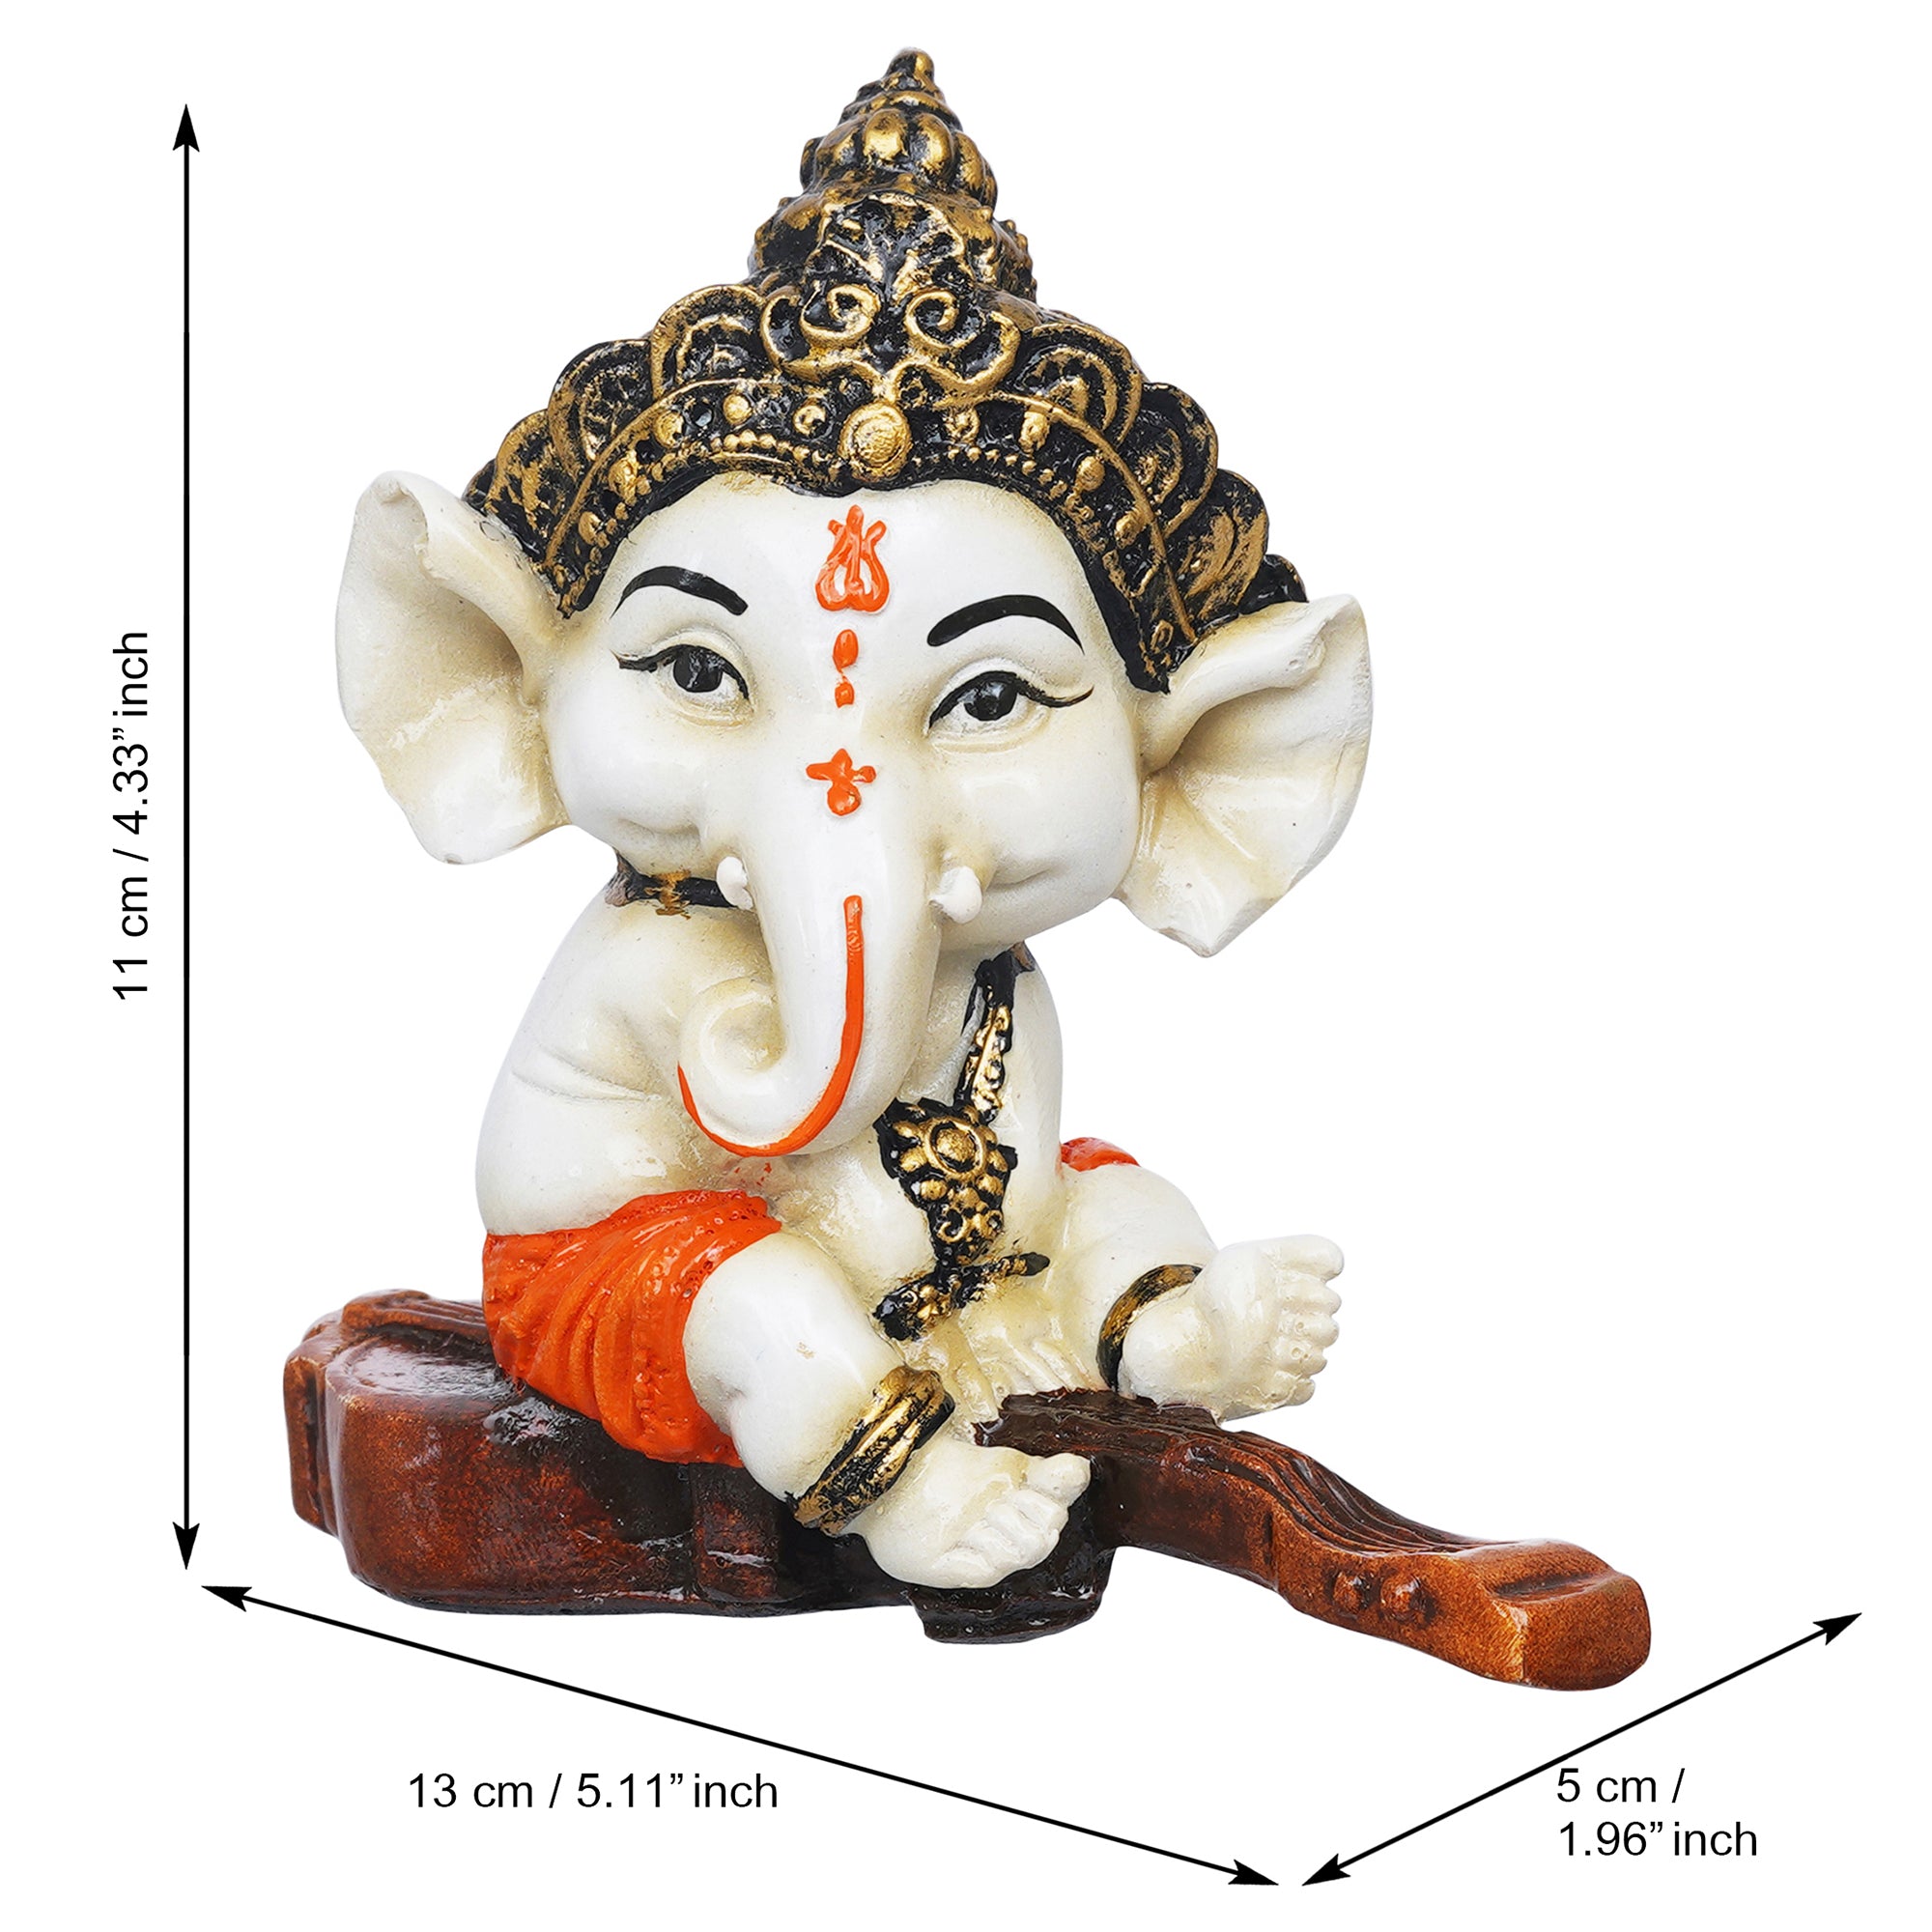 eCraftIndia Orange Polyresin Decorated Lord Ganesha Idol Sitting on Veena Musical Instrument 3